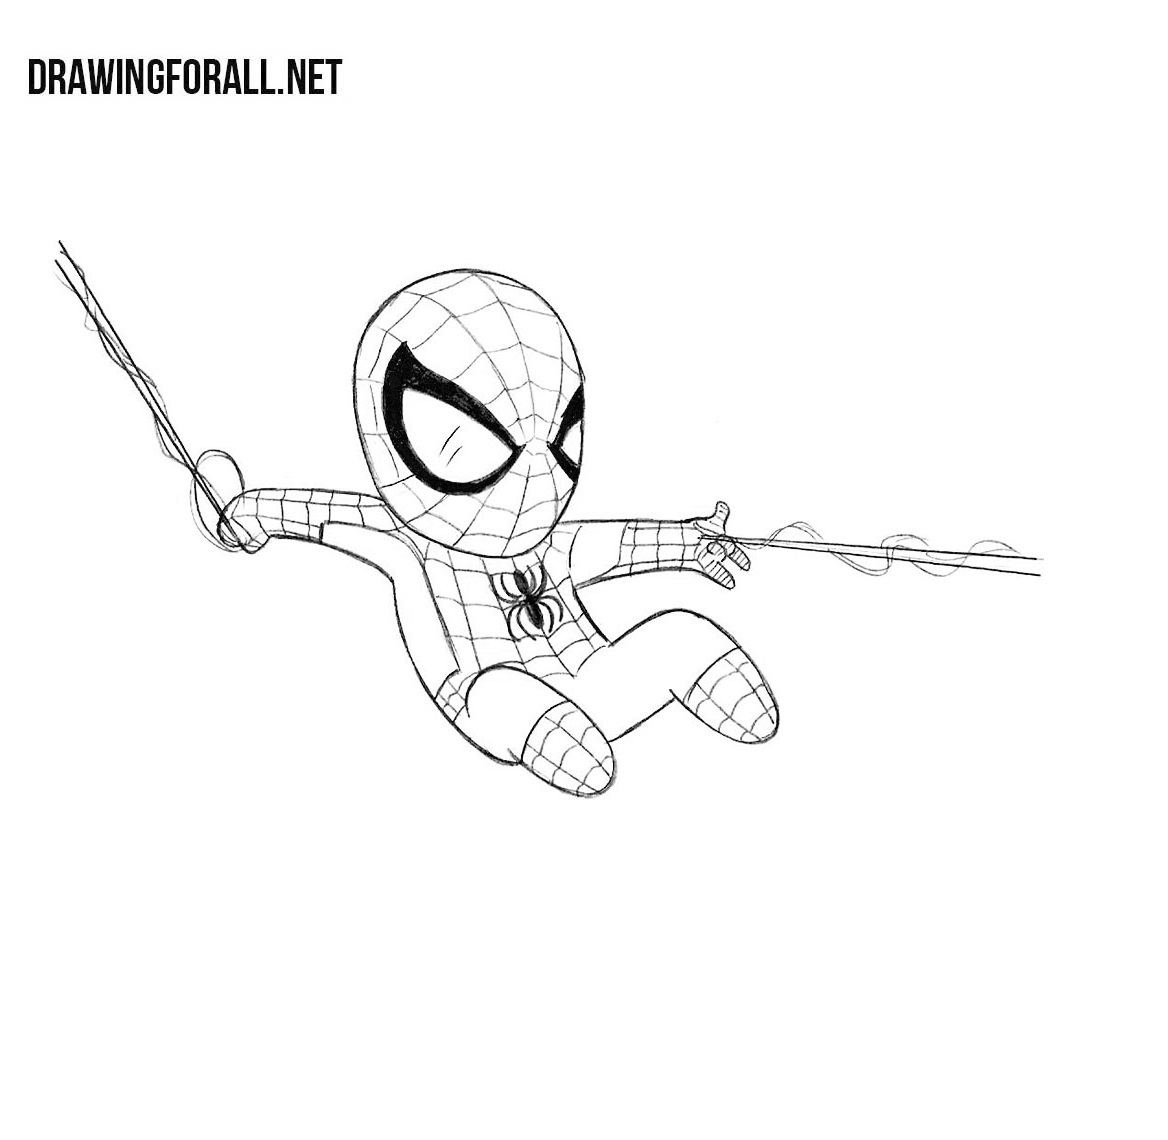 Black Spiderman Drawing Tutorial | draw2night, YouTube